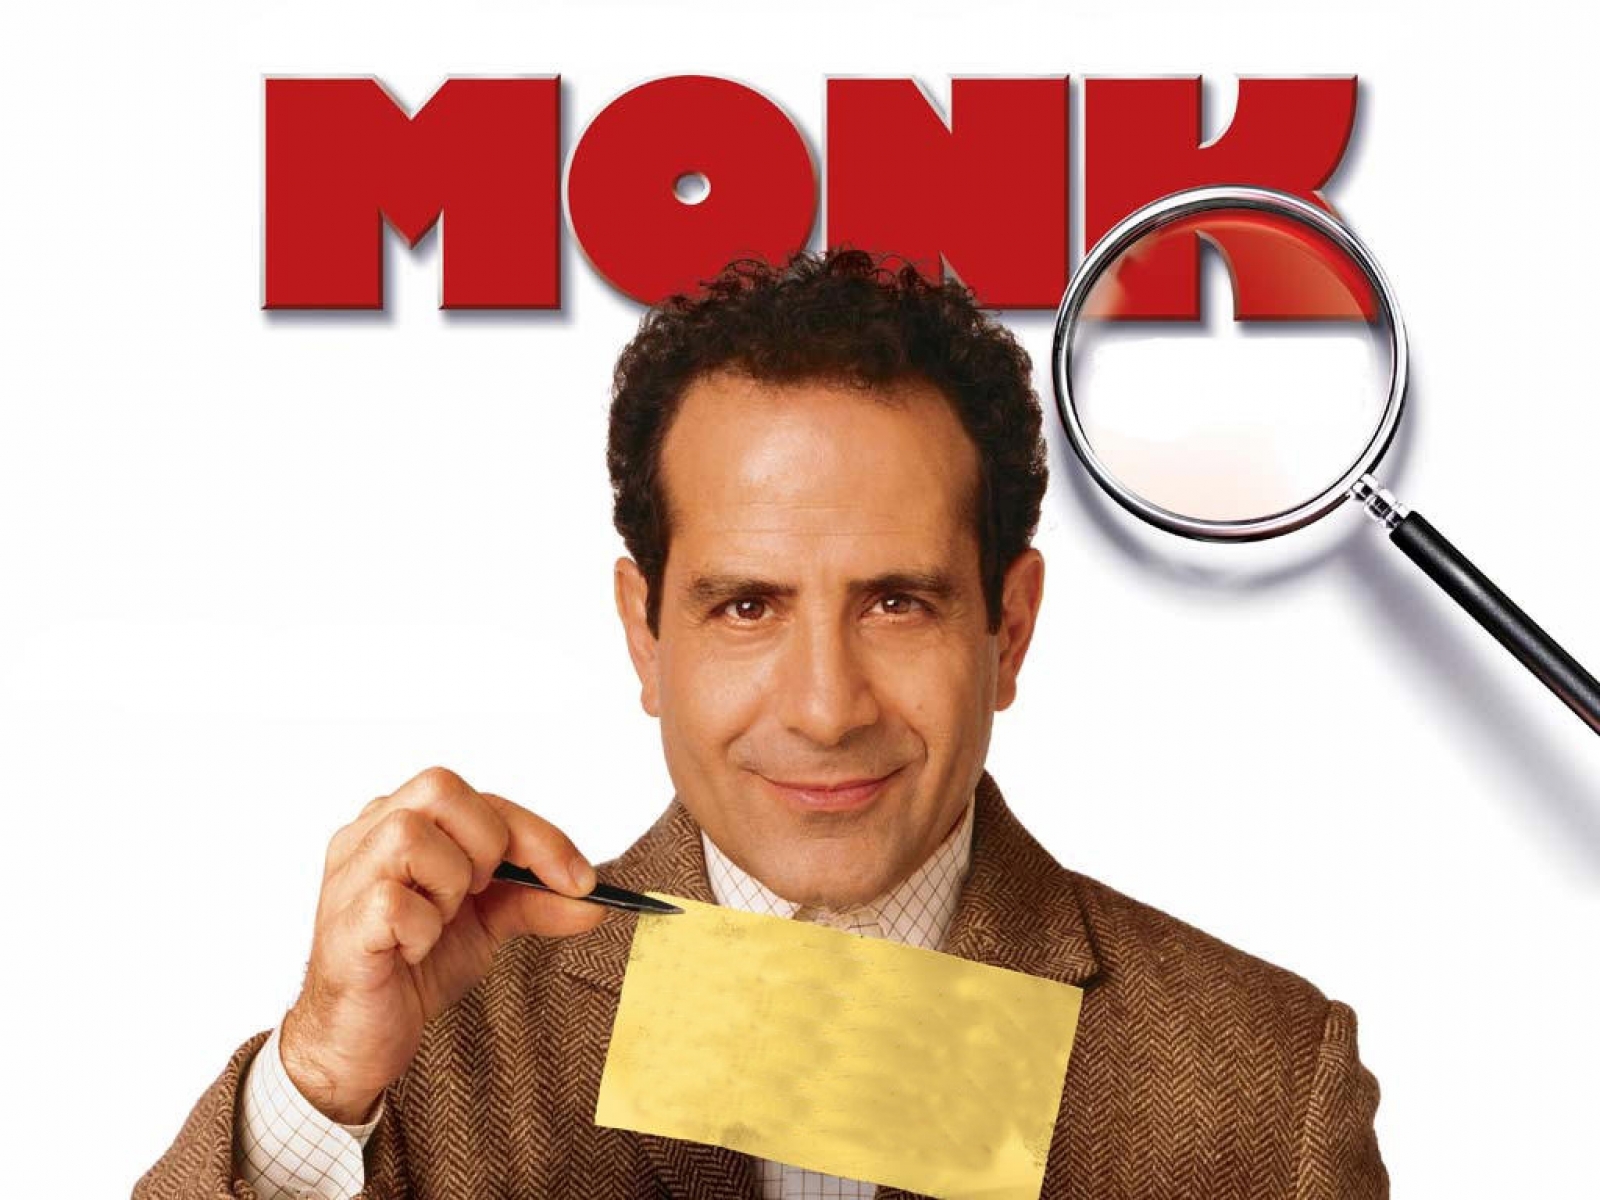 Detektyw Monk